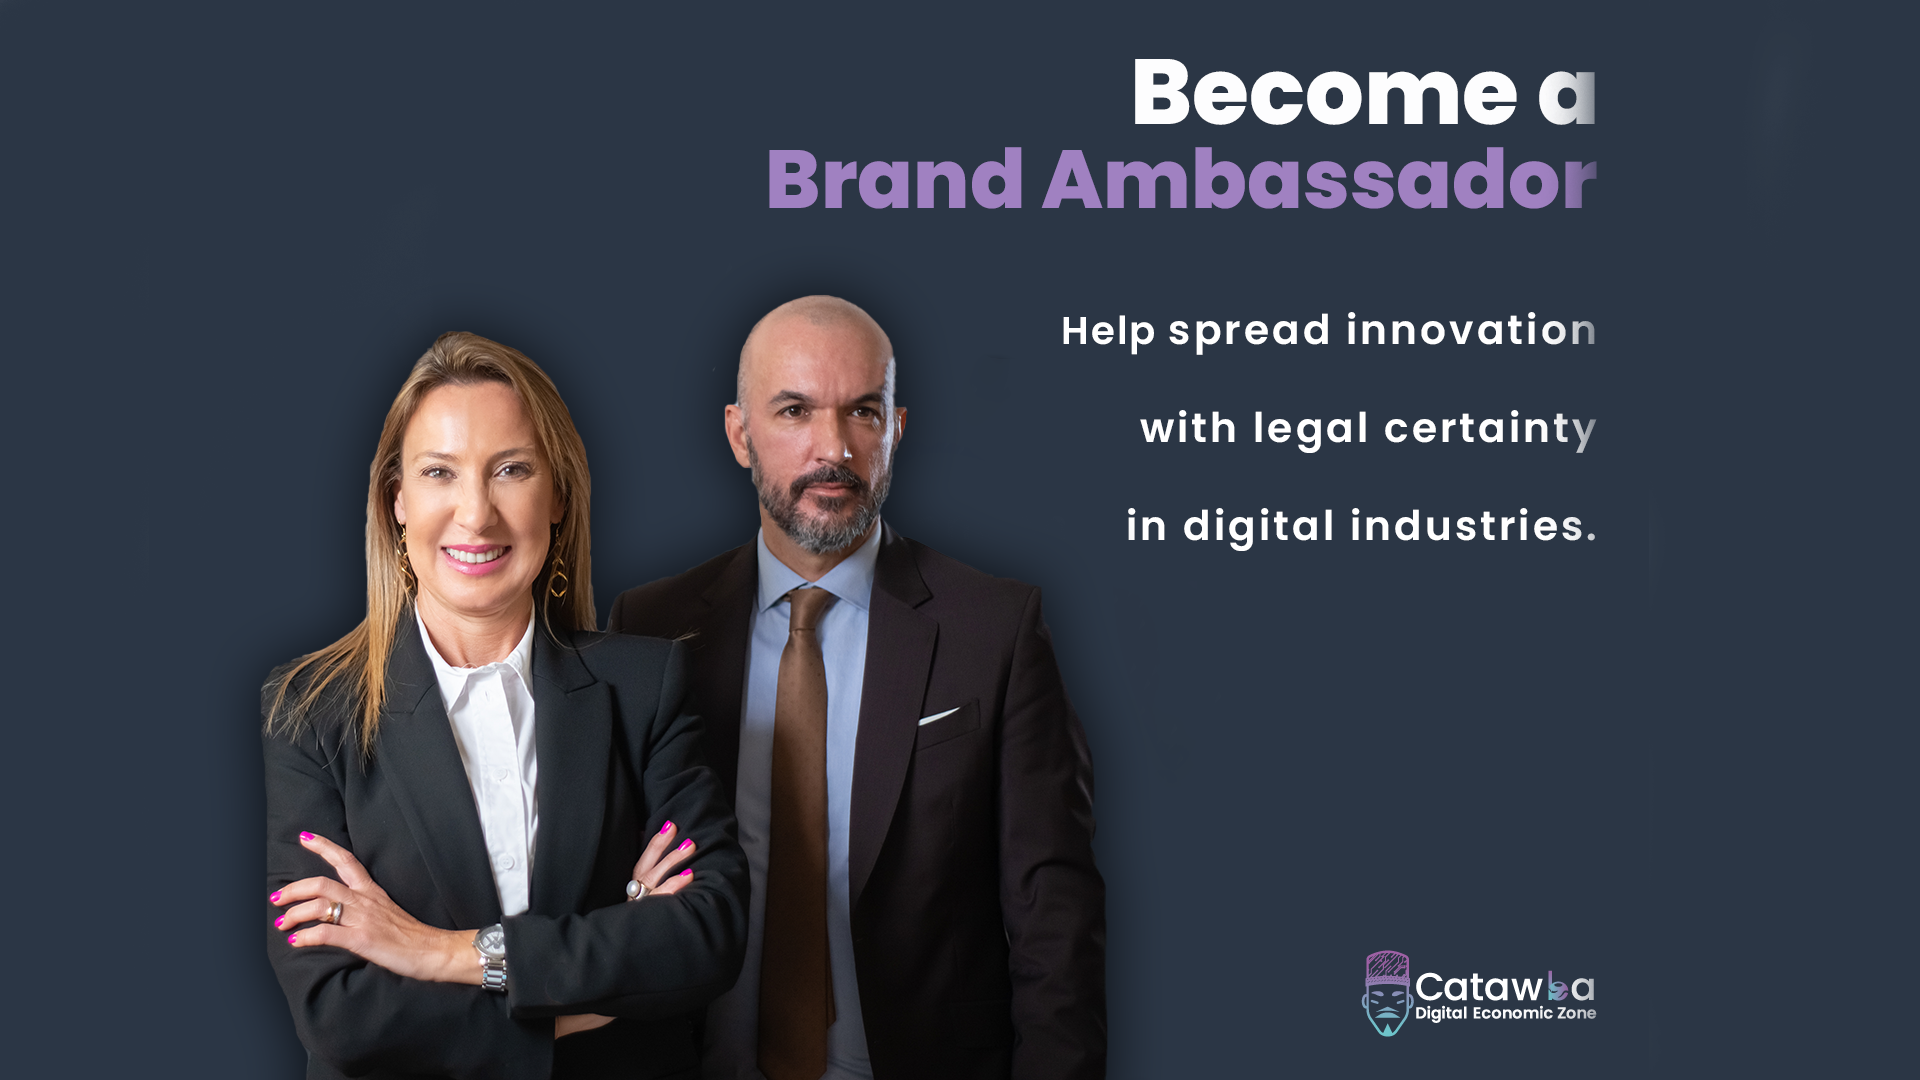 We Have Launched a Brand Ambassador Program!